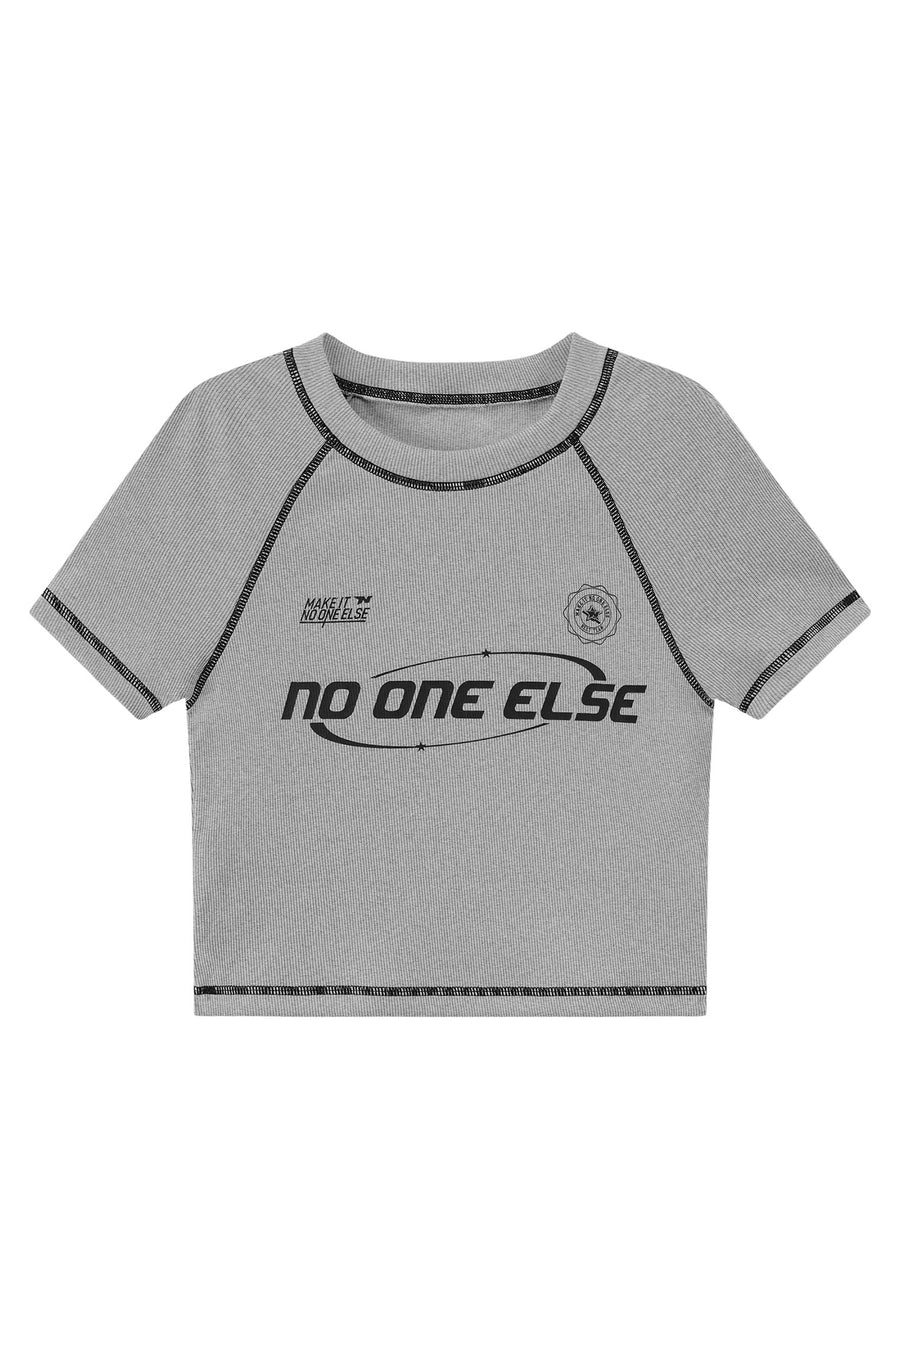 Noe Vintage Stitched Crop Short Sleeve T-Shirt